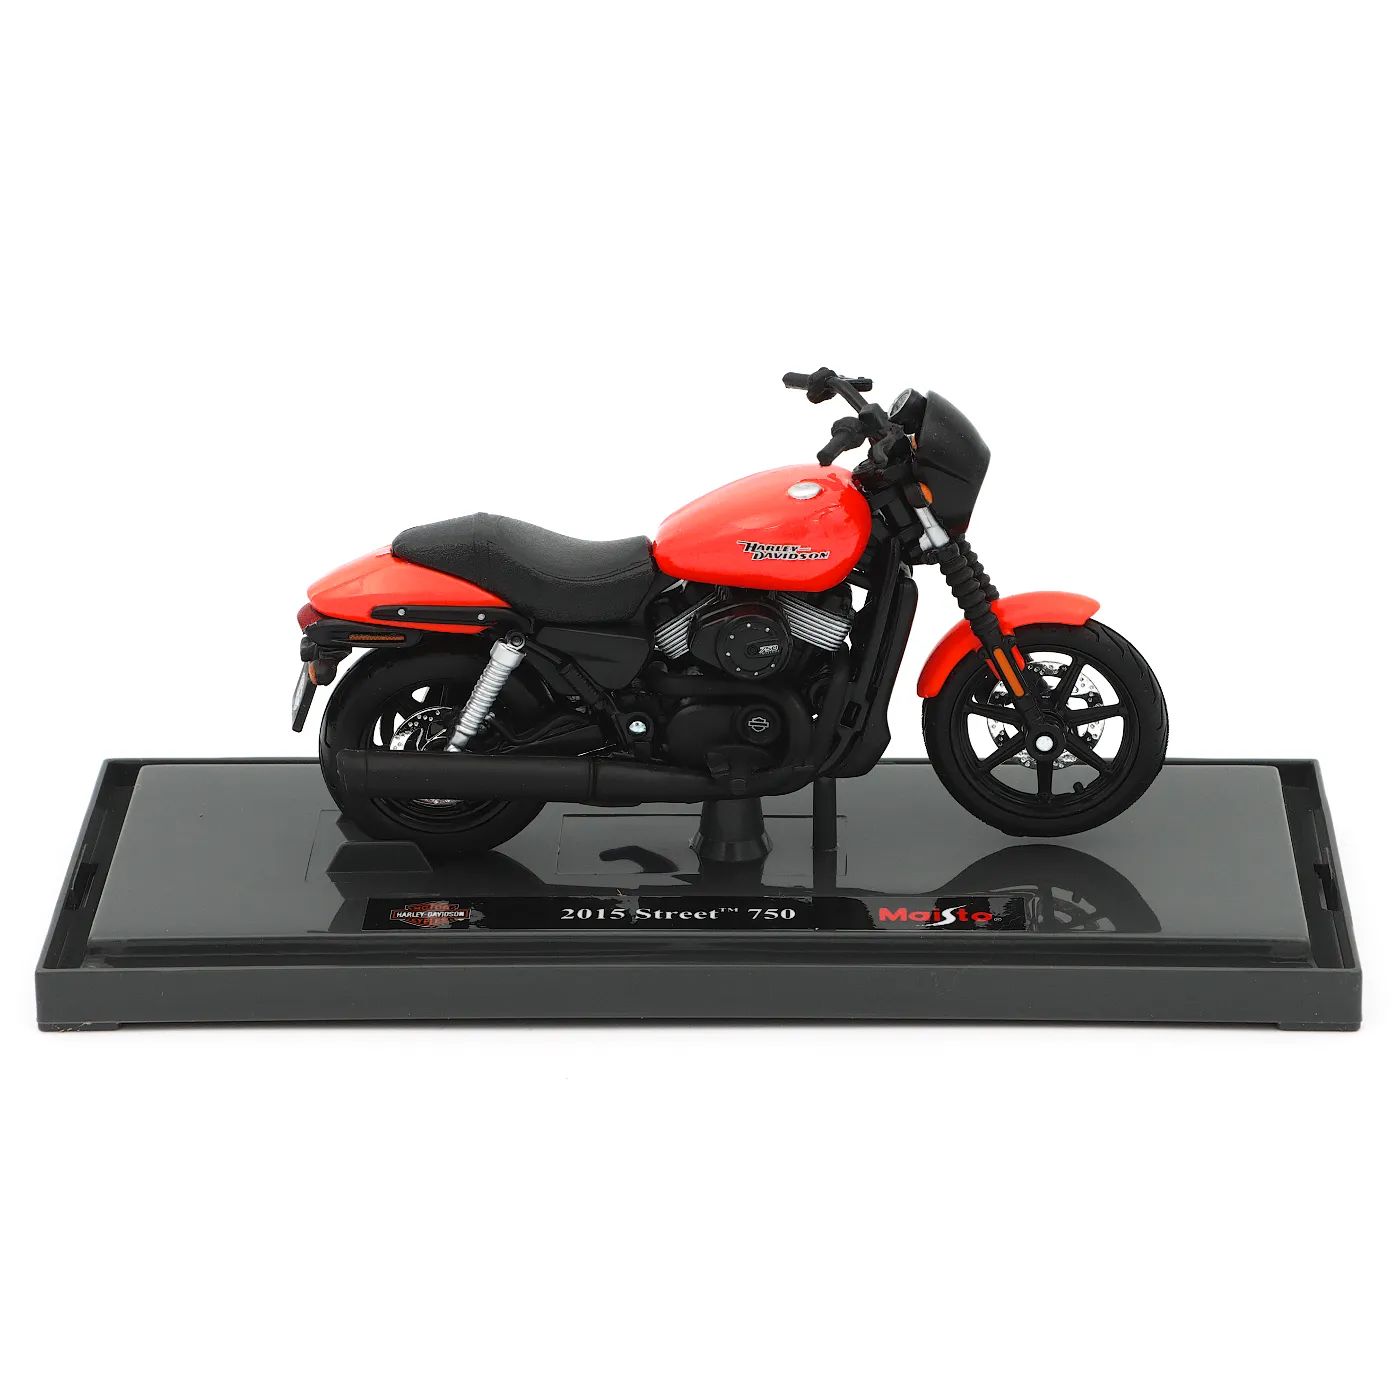 2015 Street 750 - Harley-Davidson - Röd - Maisto - 1:18